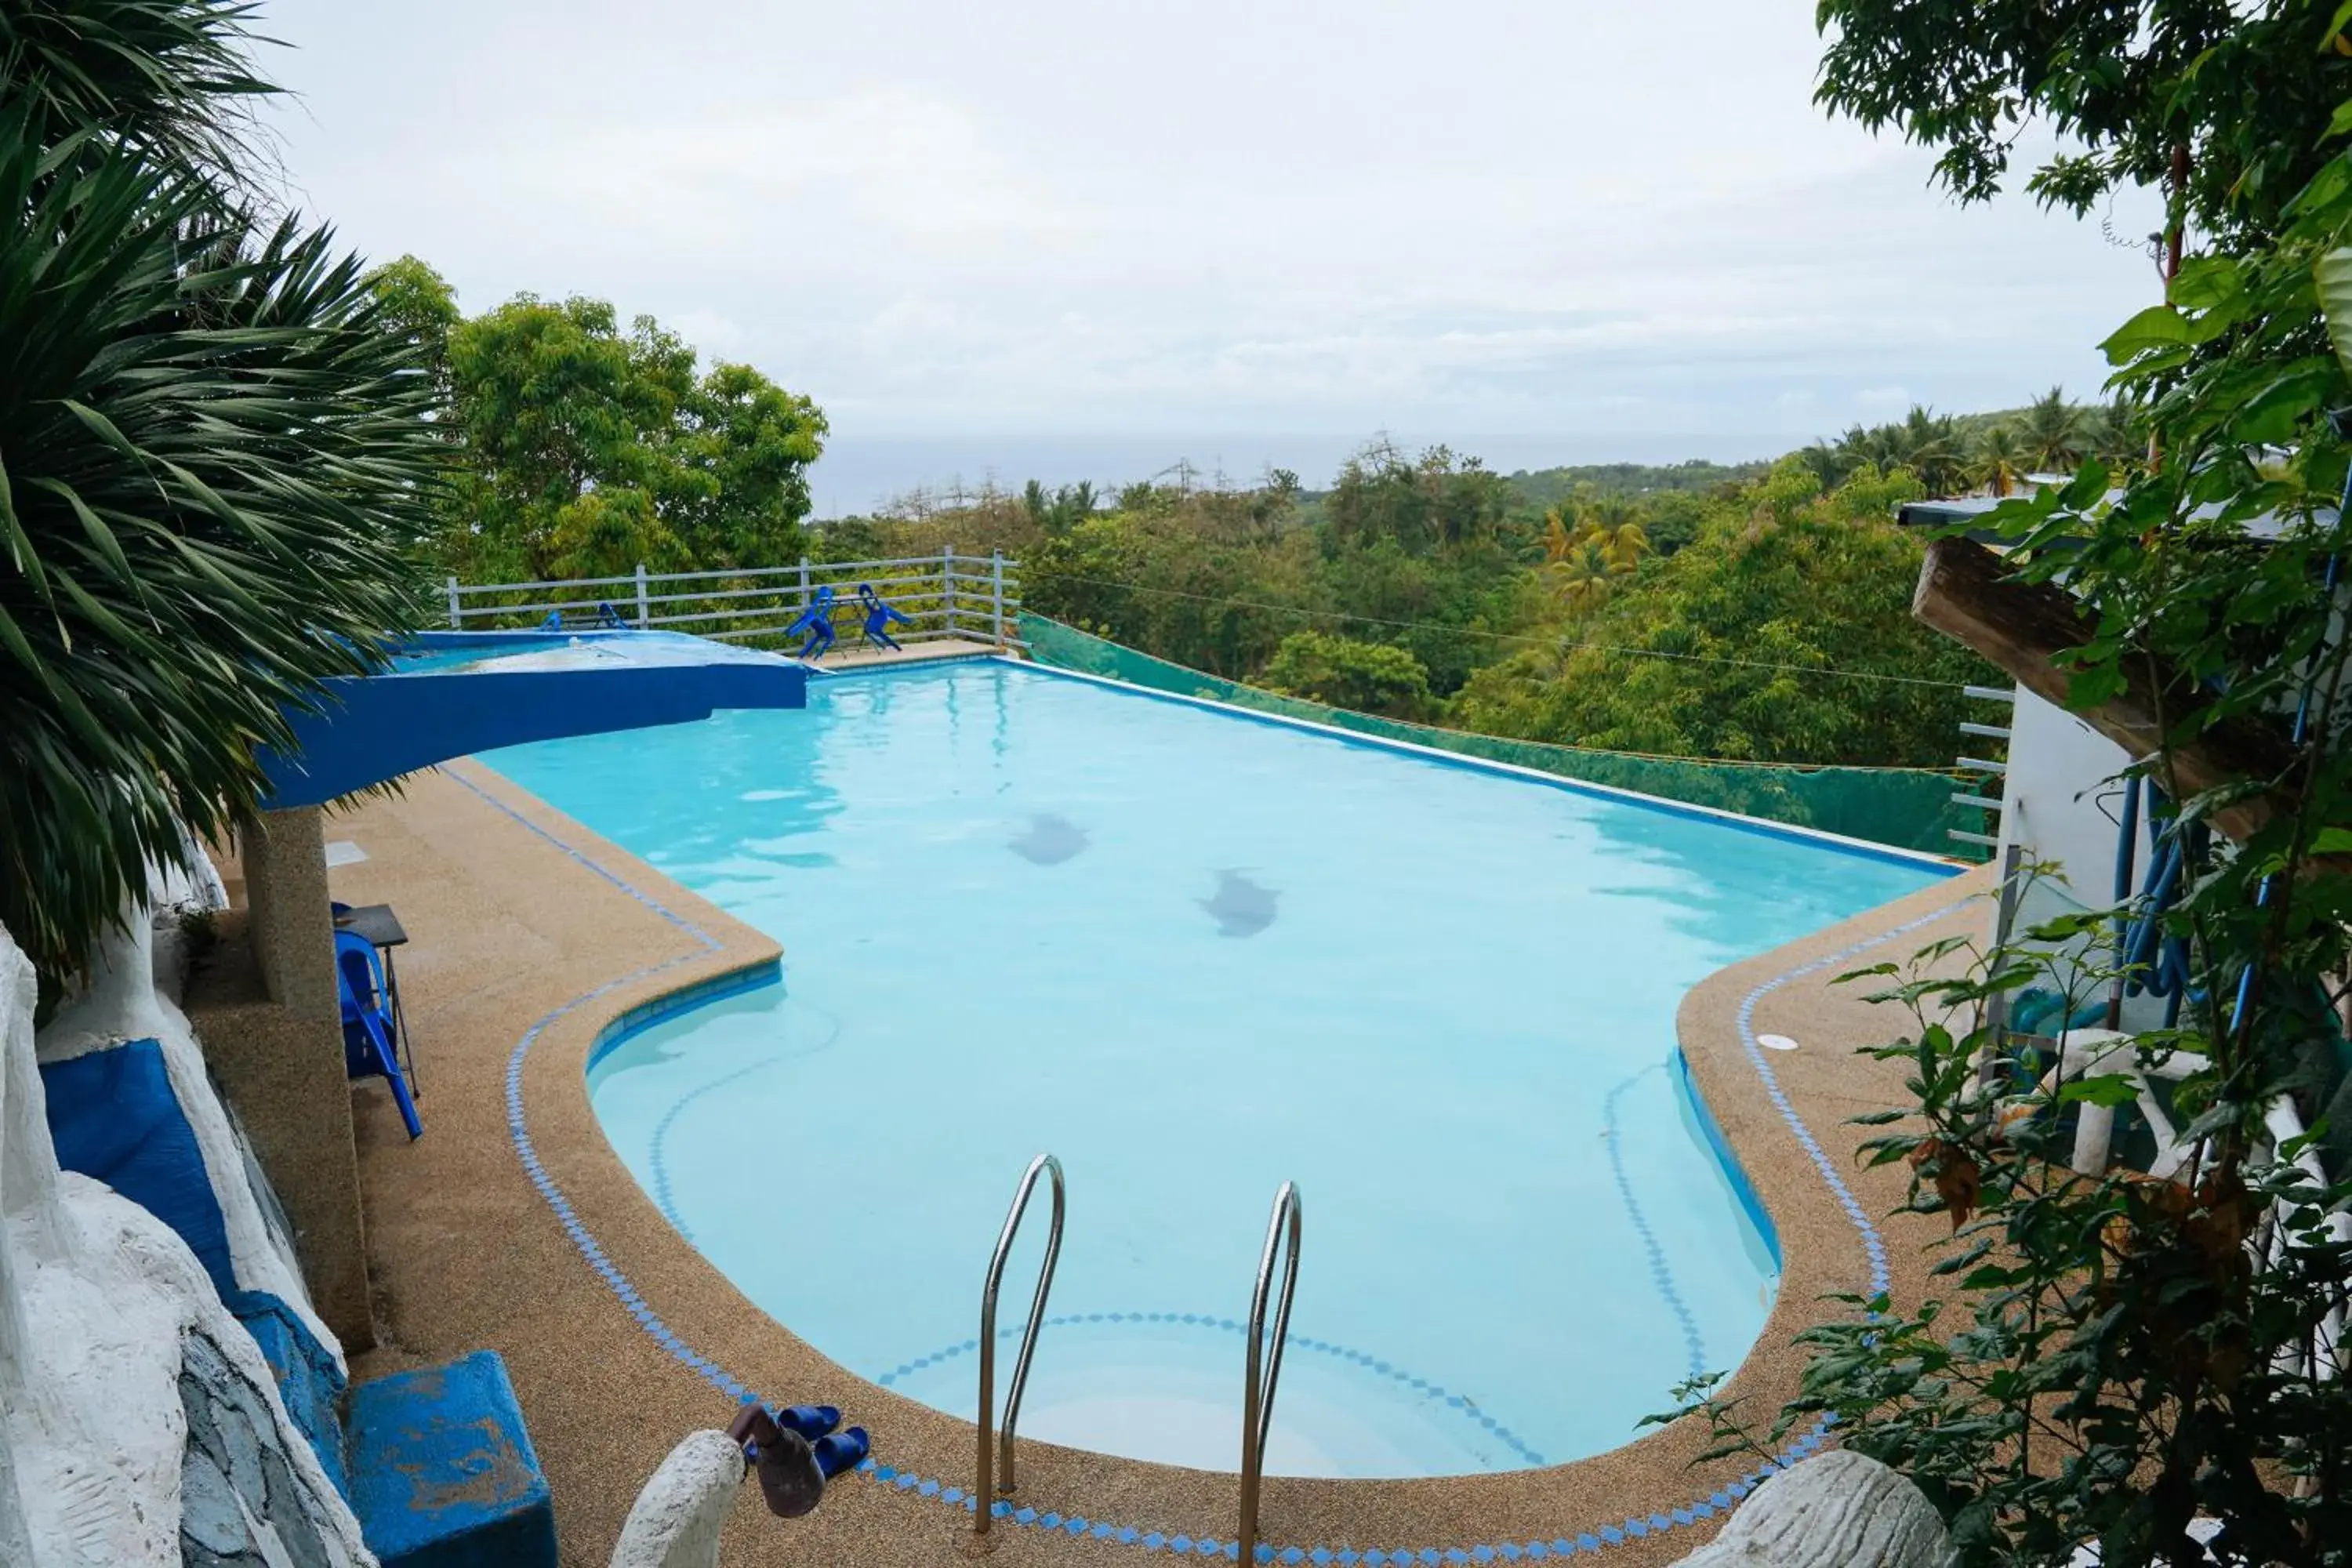 Swimming Pool in Negra Mountain Resort